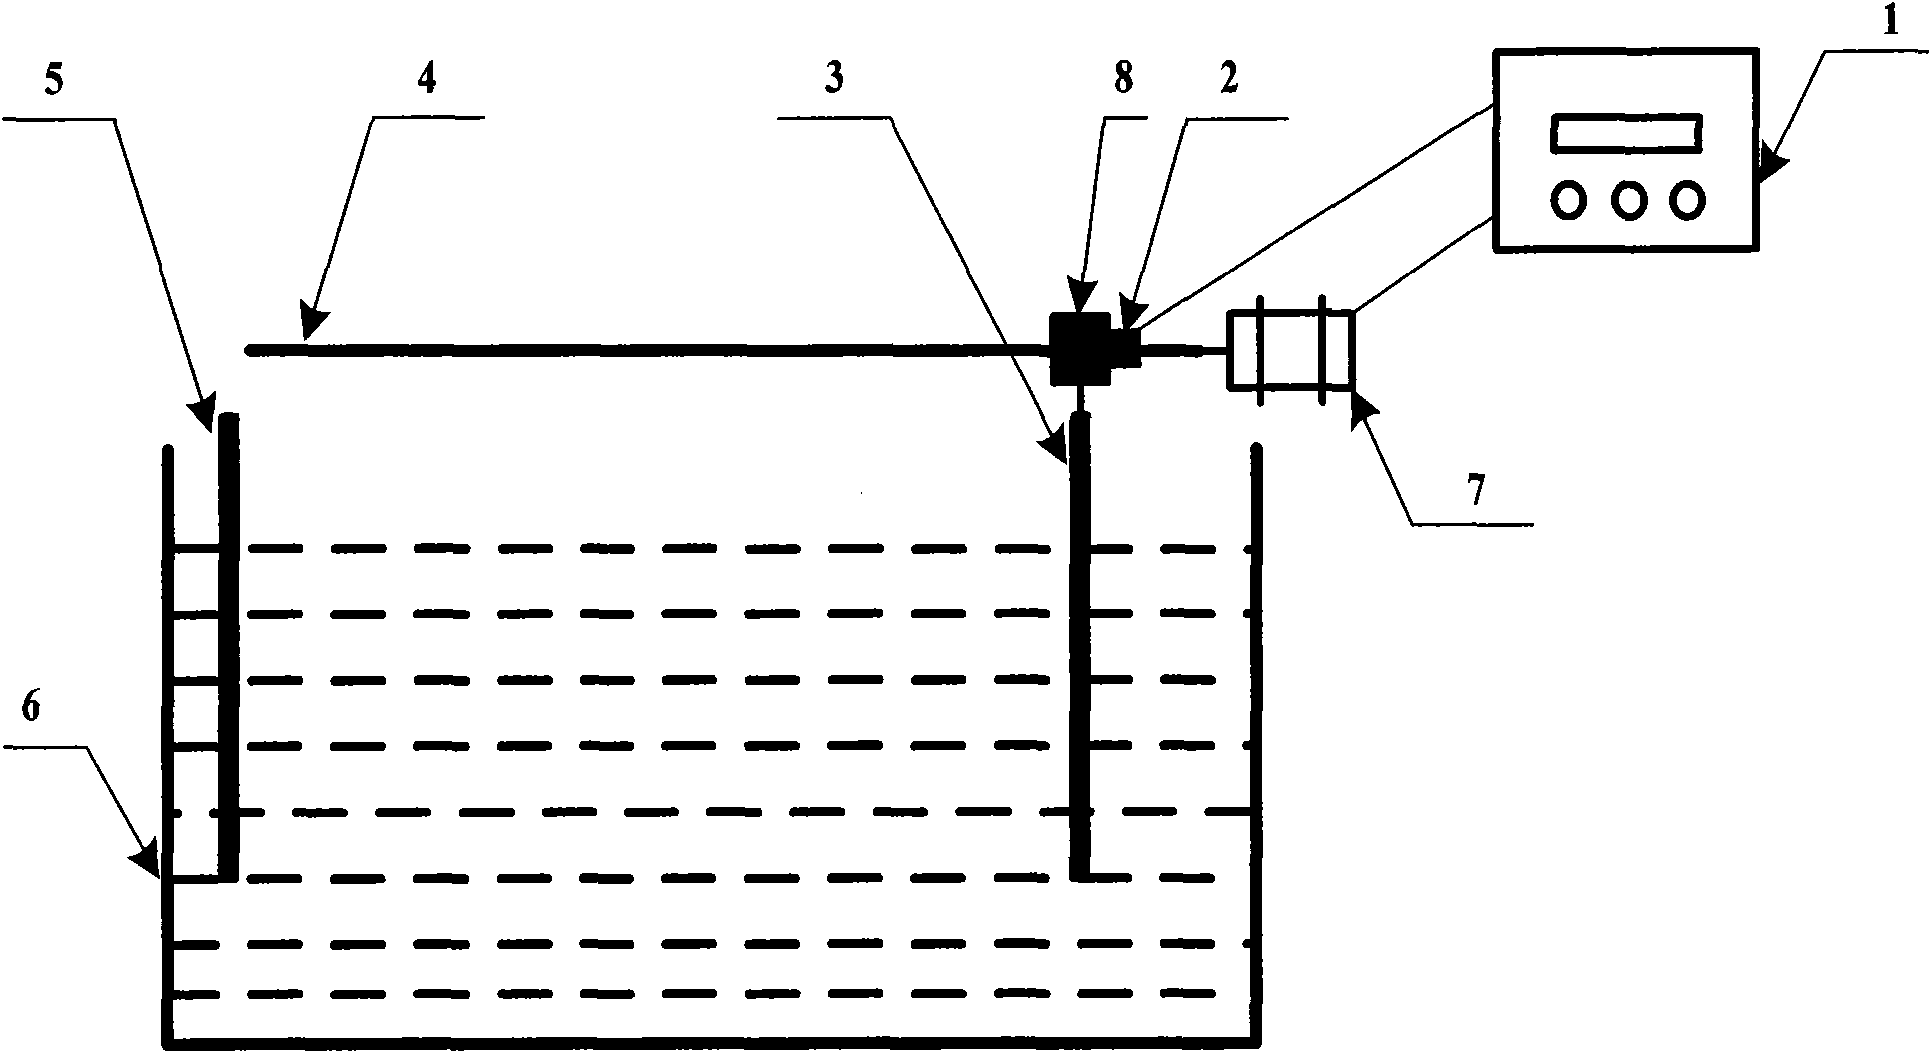 Liquid resistor loading device